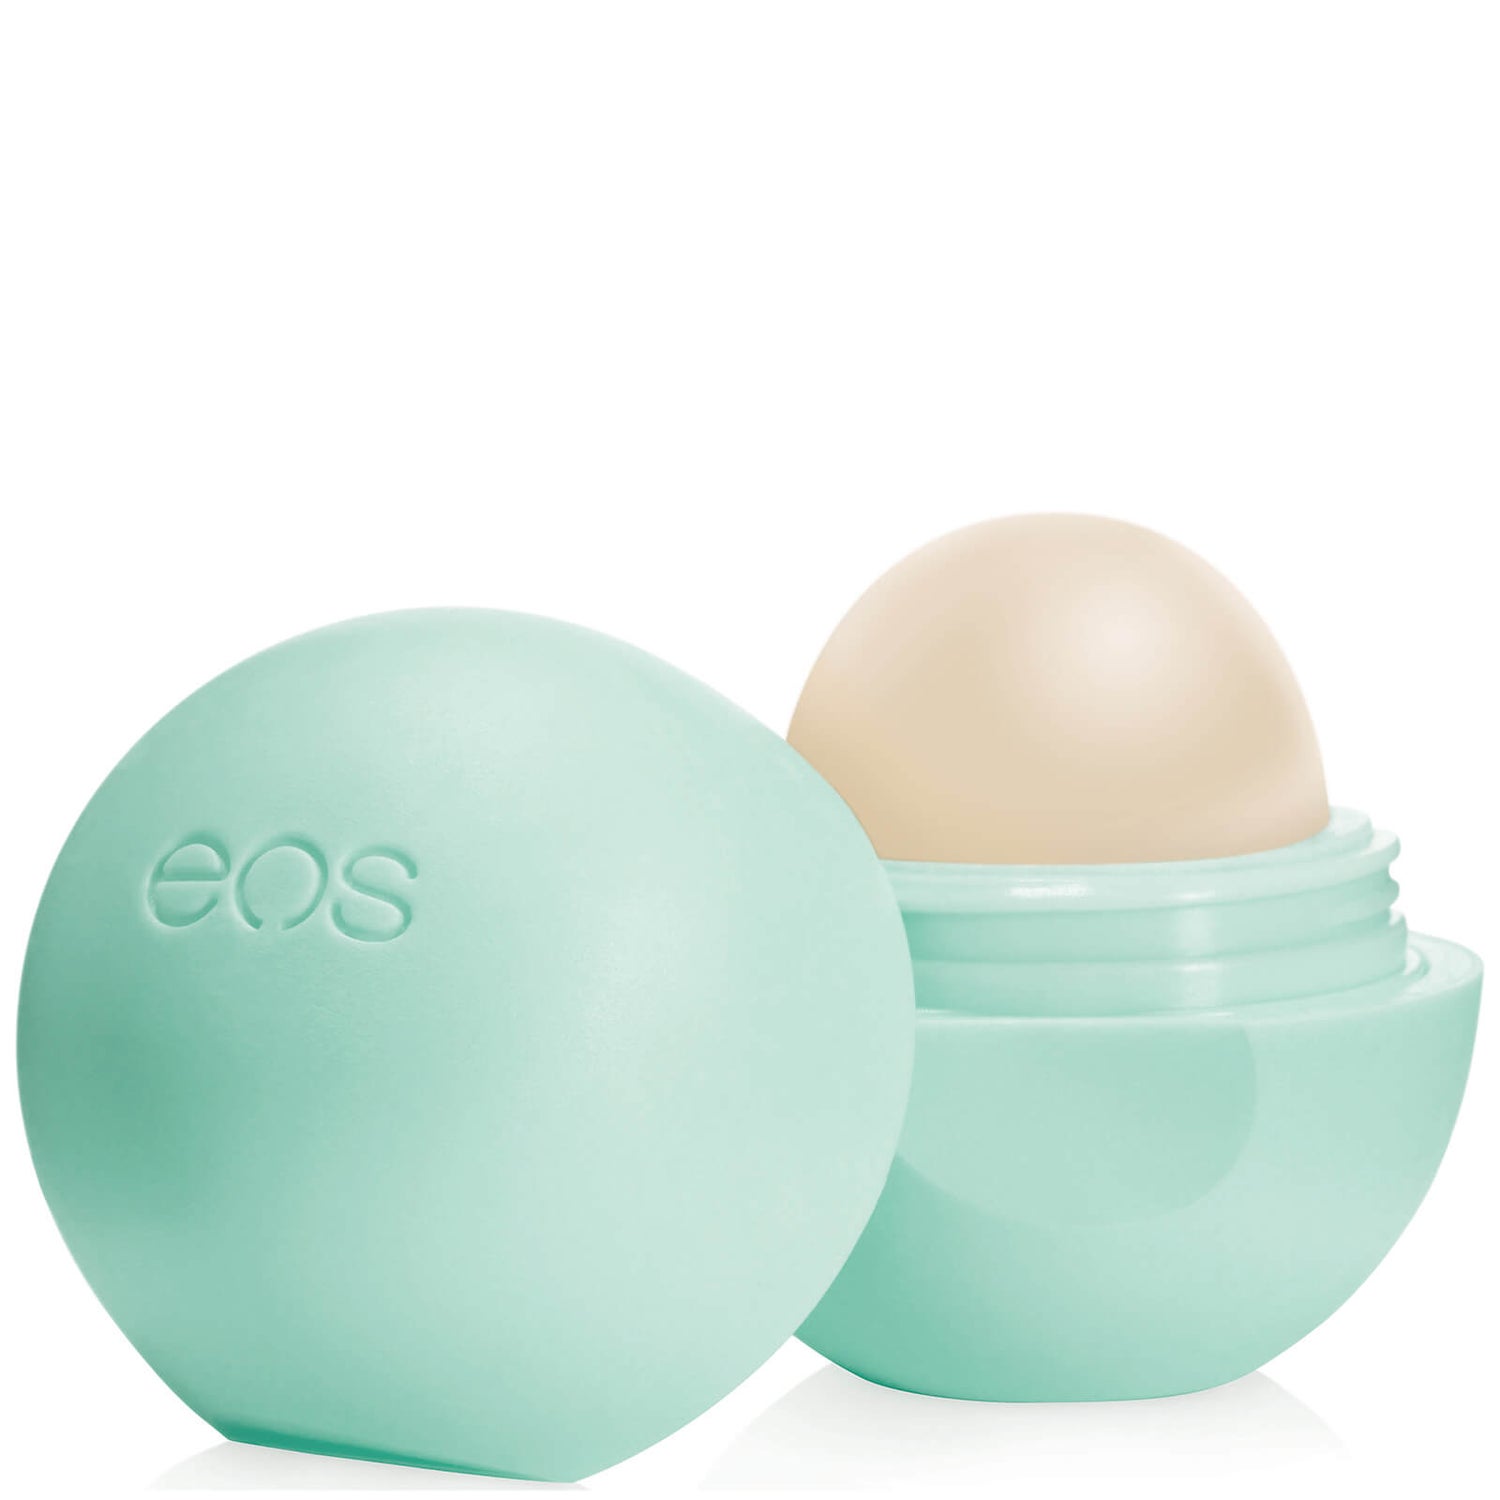 EOS Sweet Mint Smooth Sphere Lip Balm lookfantastic